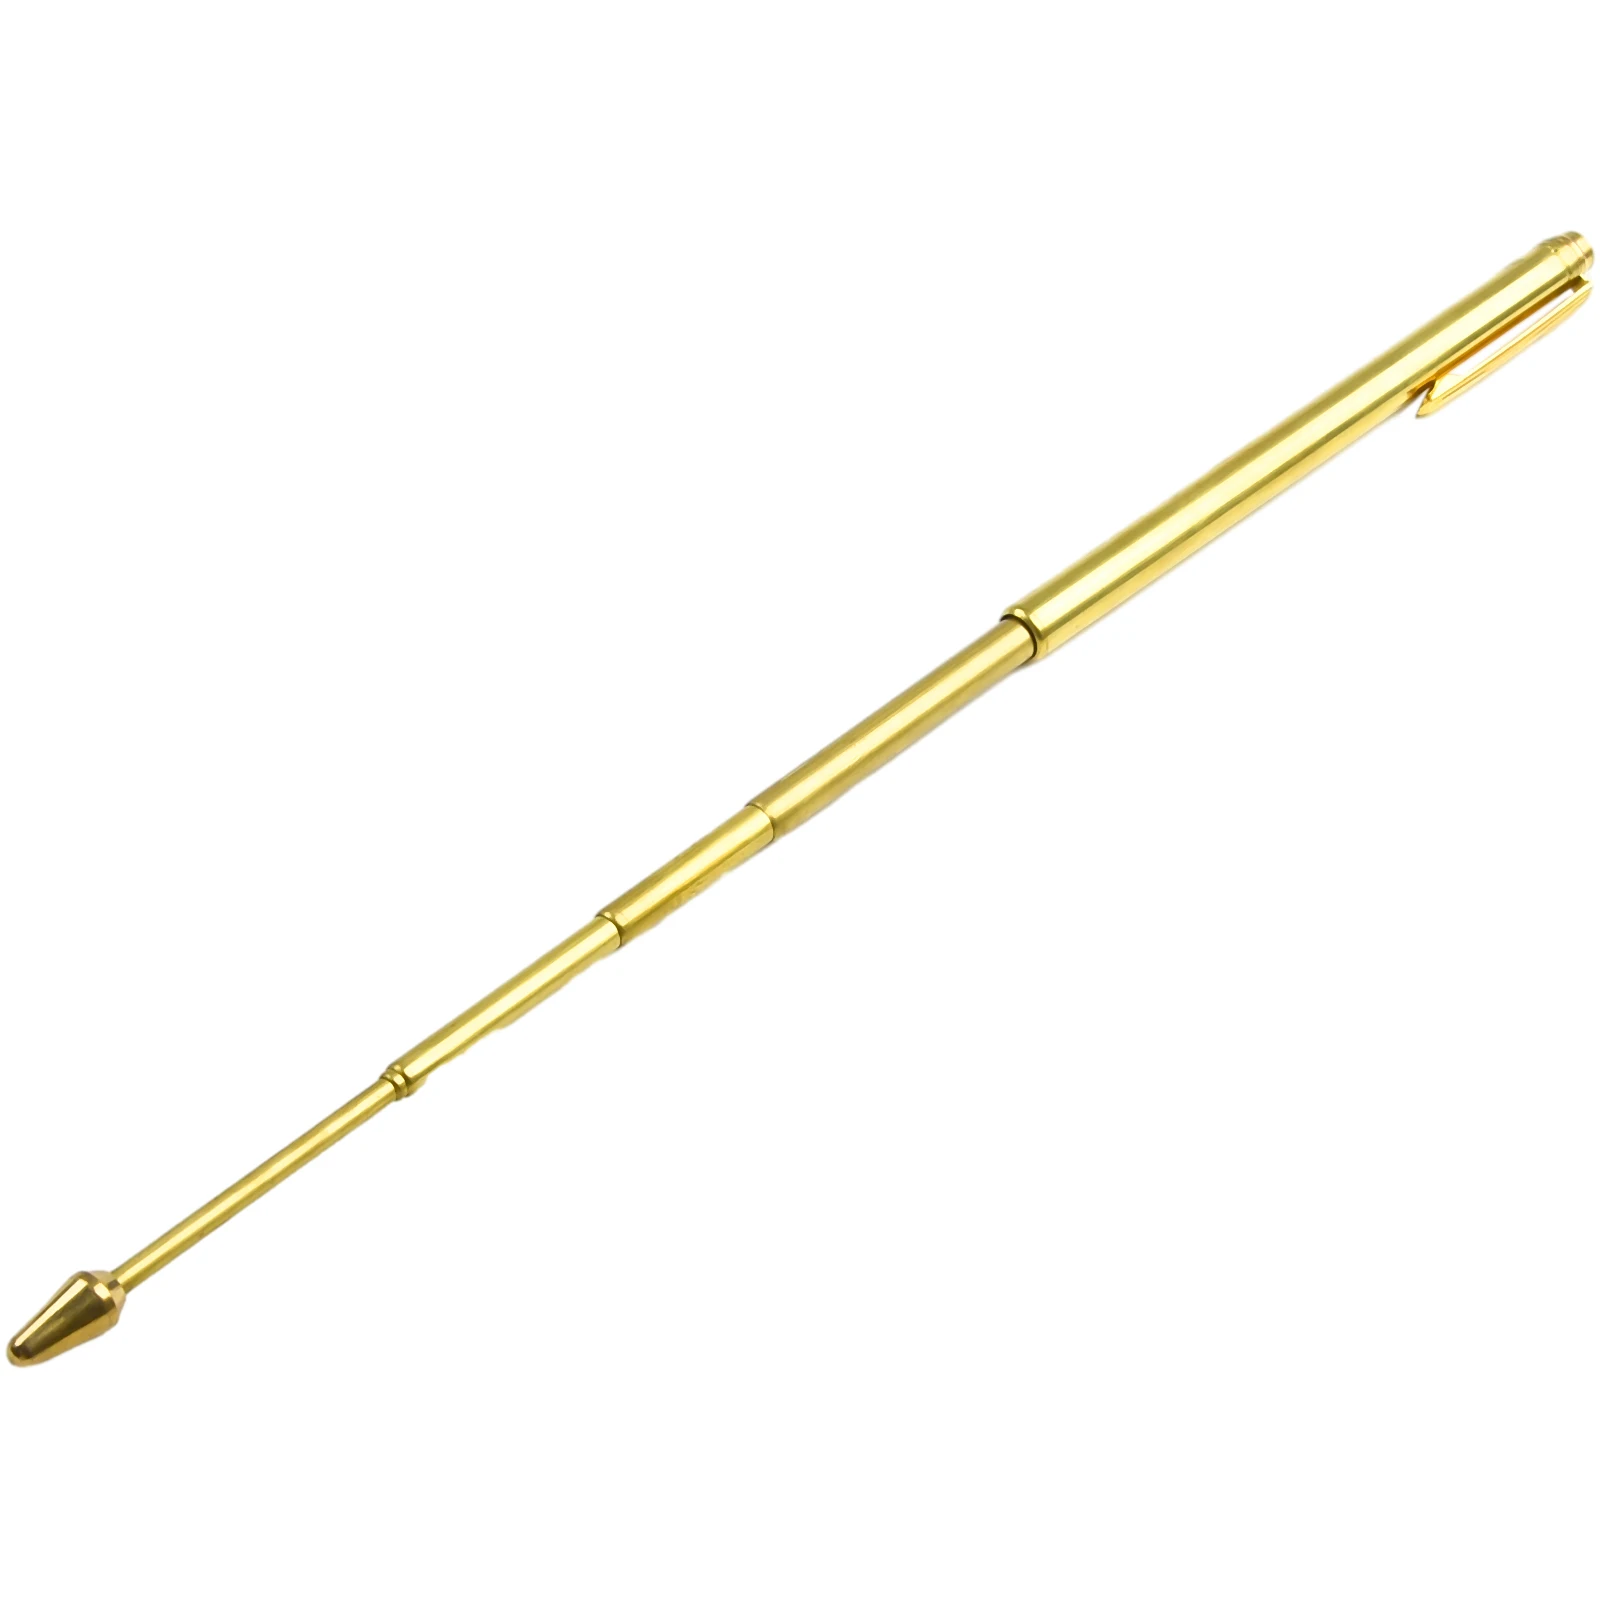 2pcs  99.9% Copper Detector Rod Metal Detector Rod For Water/Treasure/Finding Tools Industrial Metal Detectors